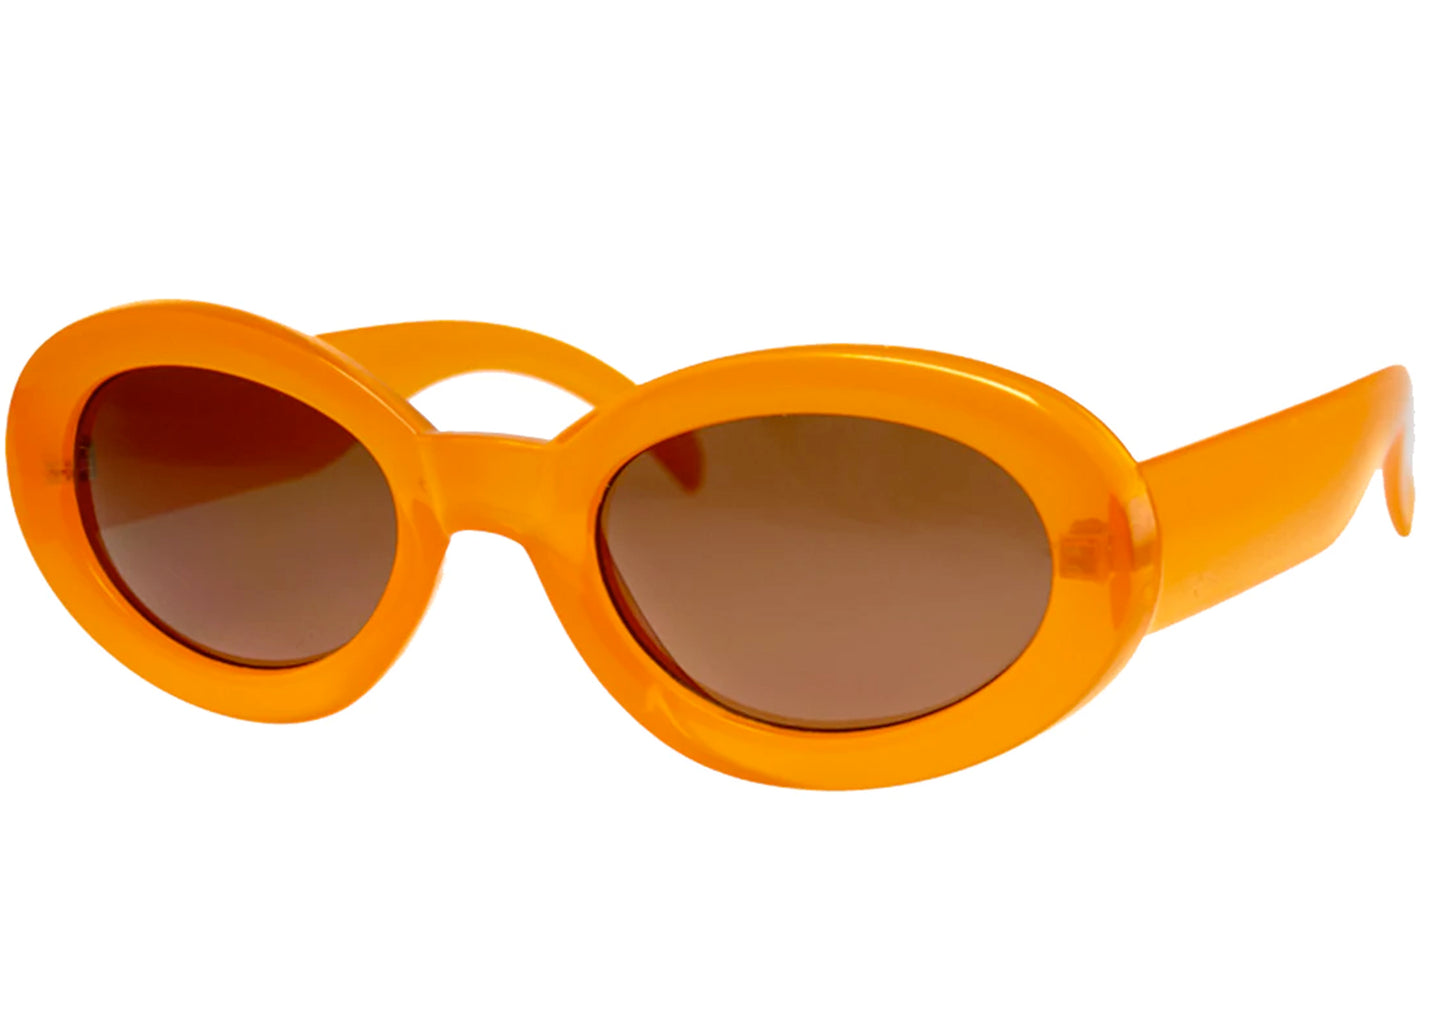 Fun Cats Sunglasses in Orange